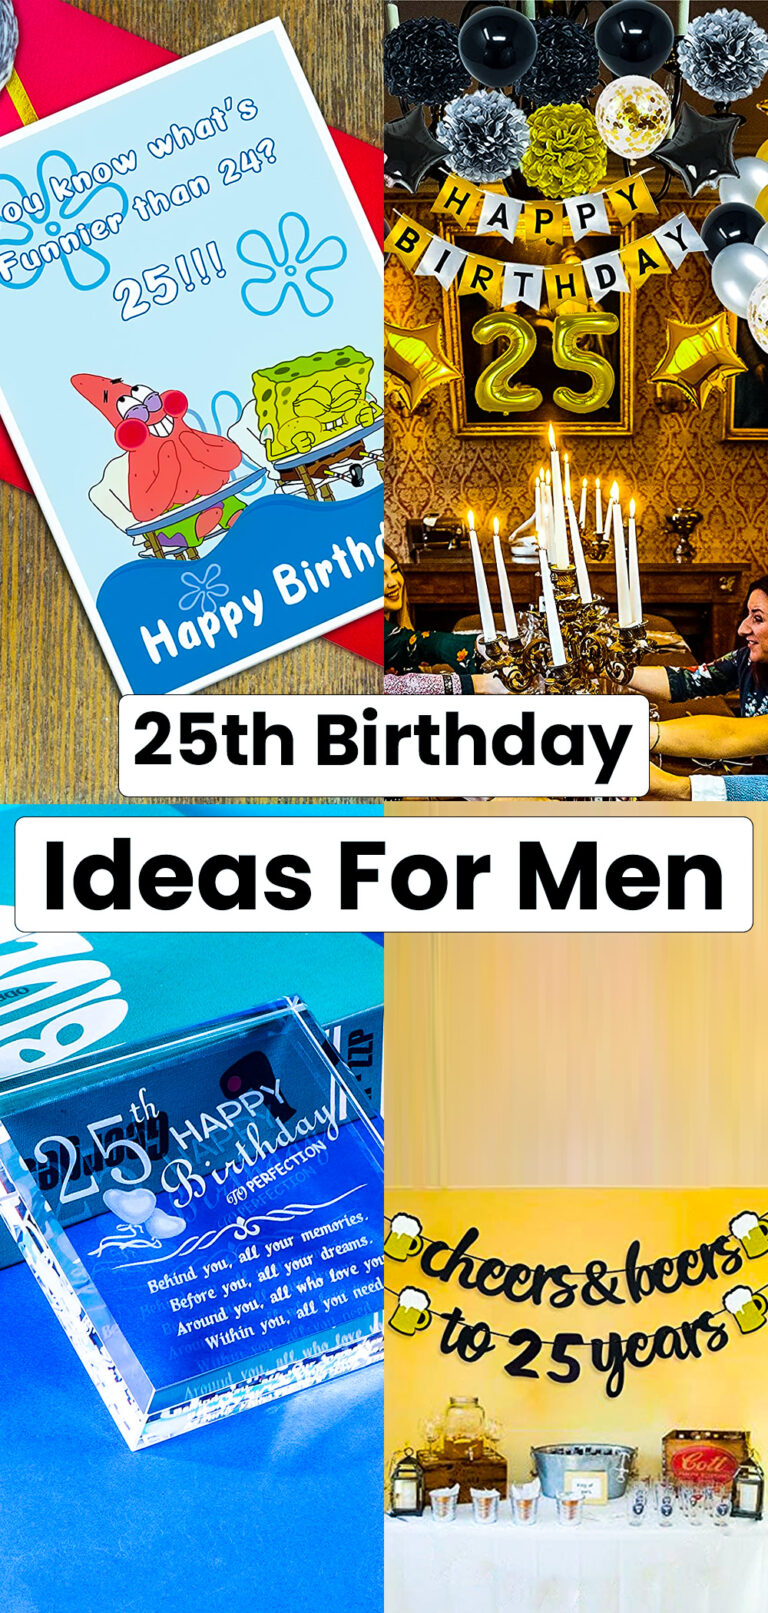 25th Birthday Ideas for Men